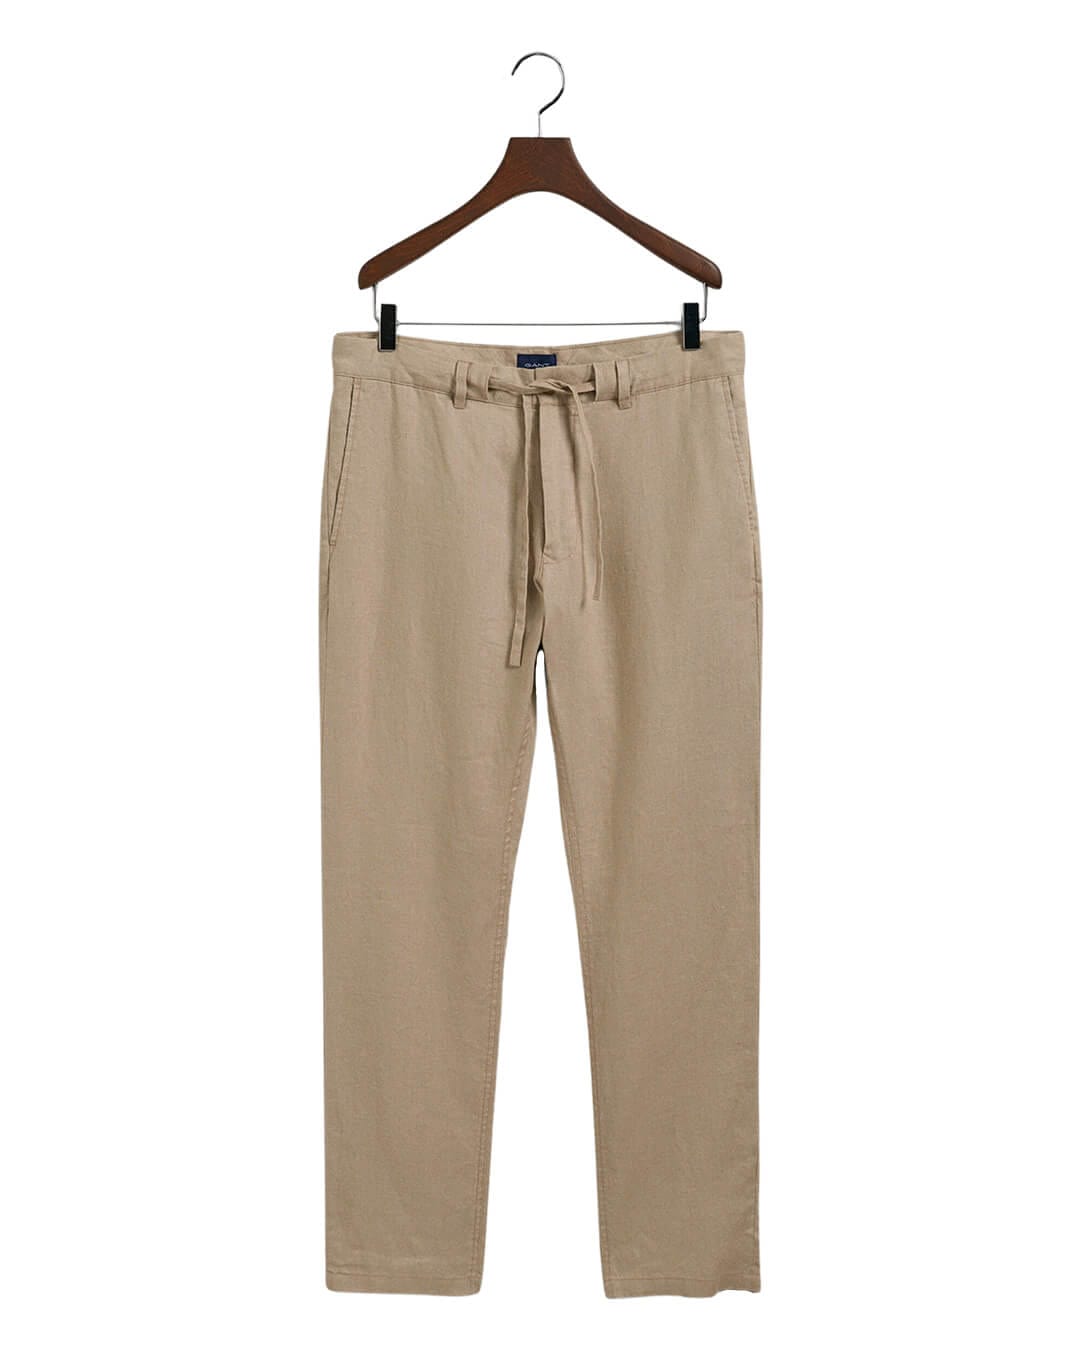 Gant Trousers Gant Beige Relaxed Fit Linen Drawstring Pants